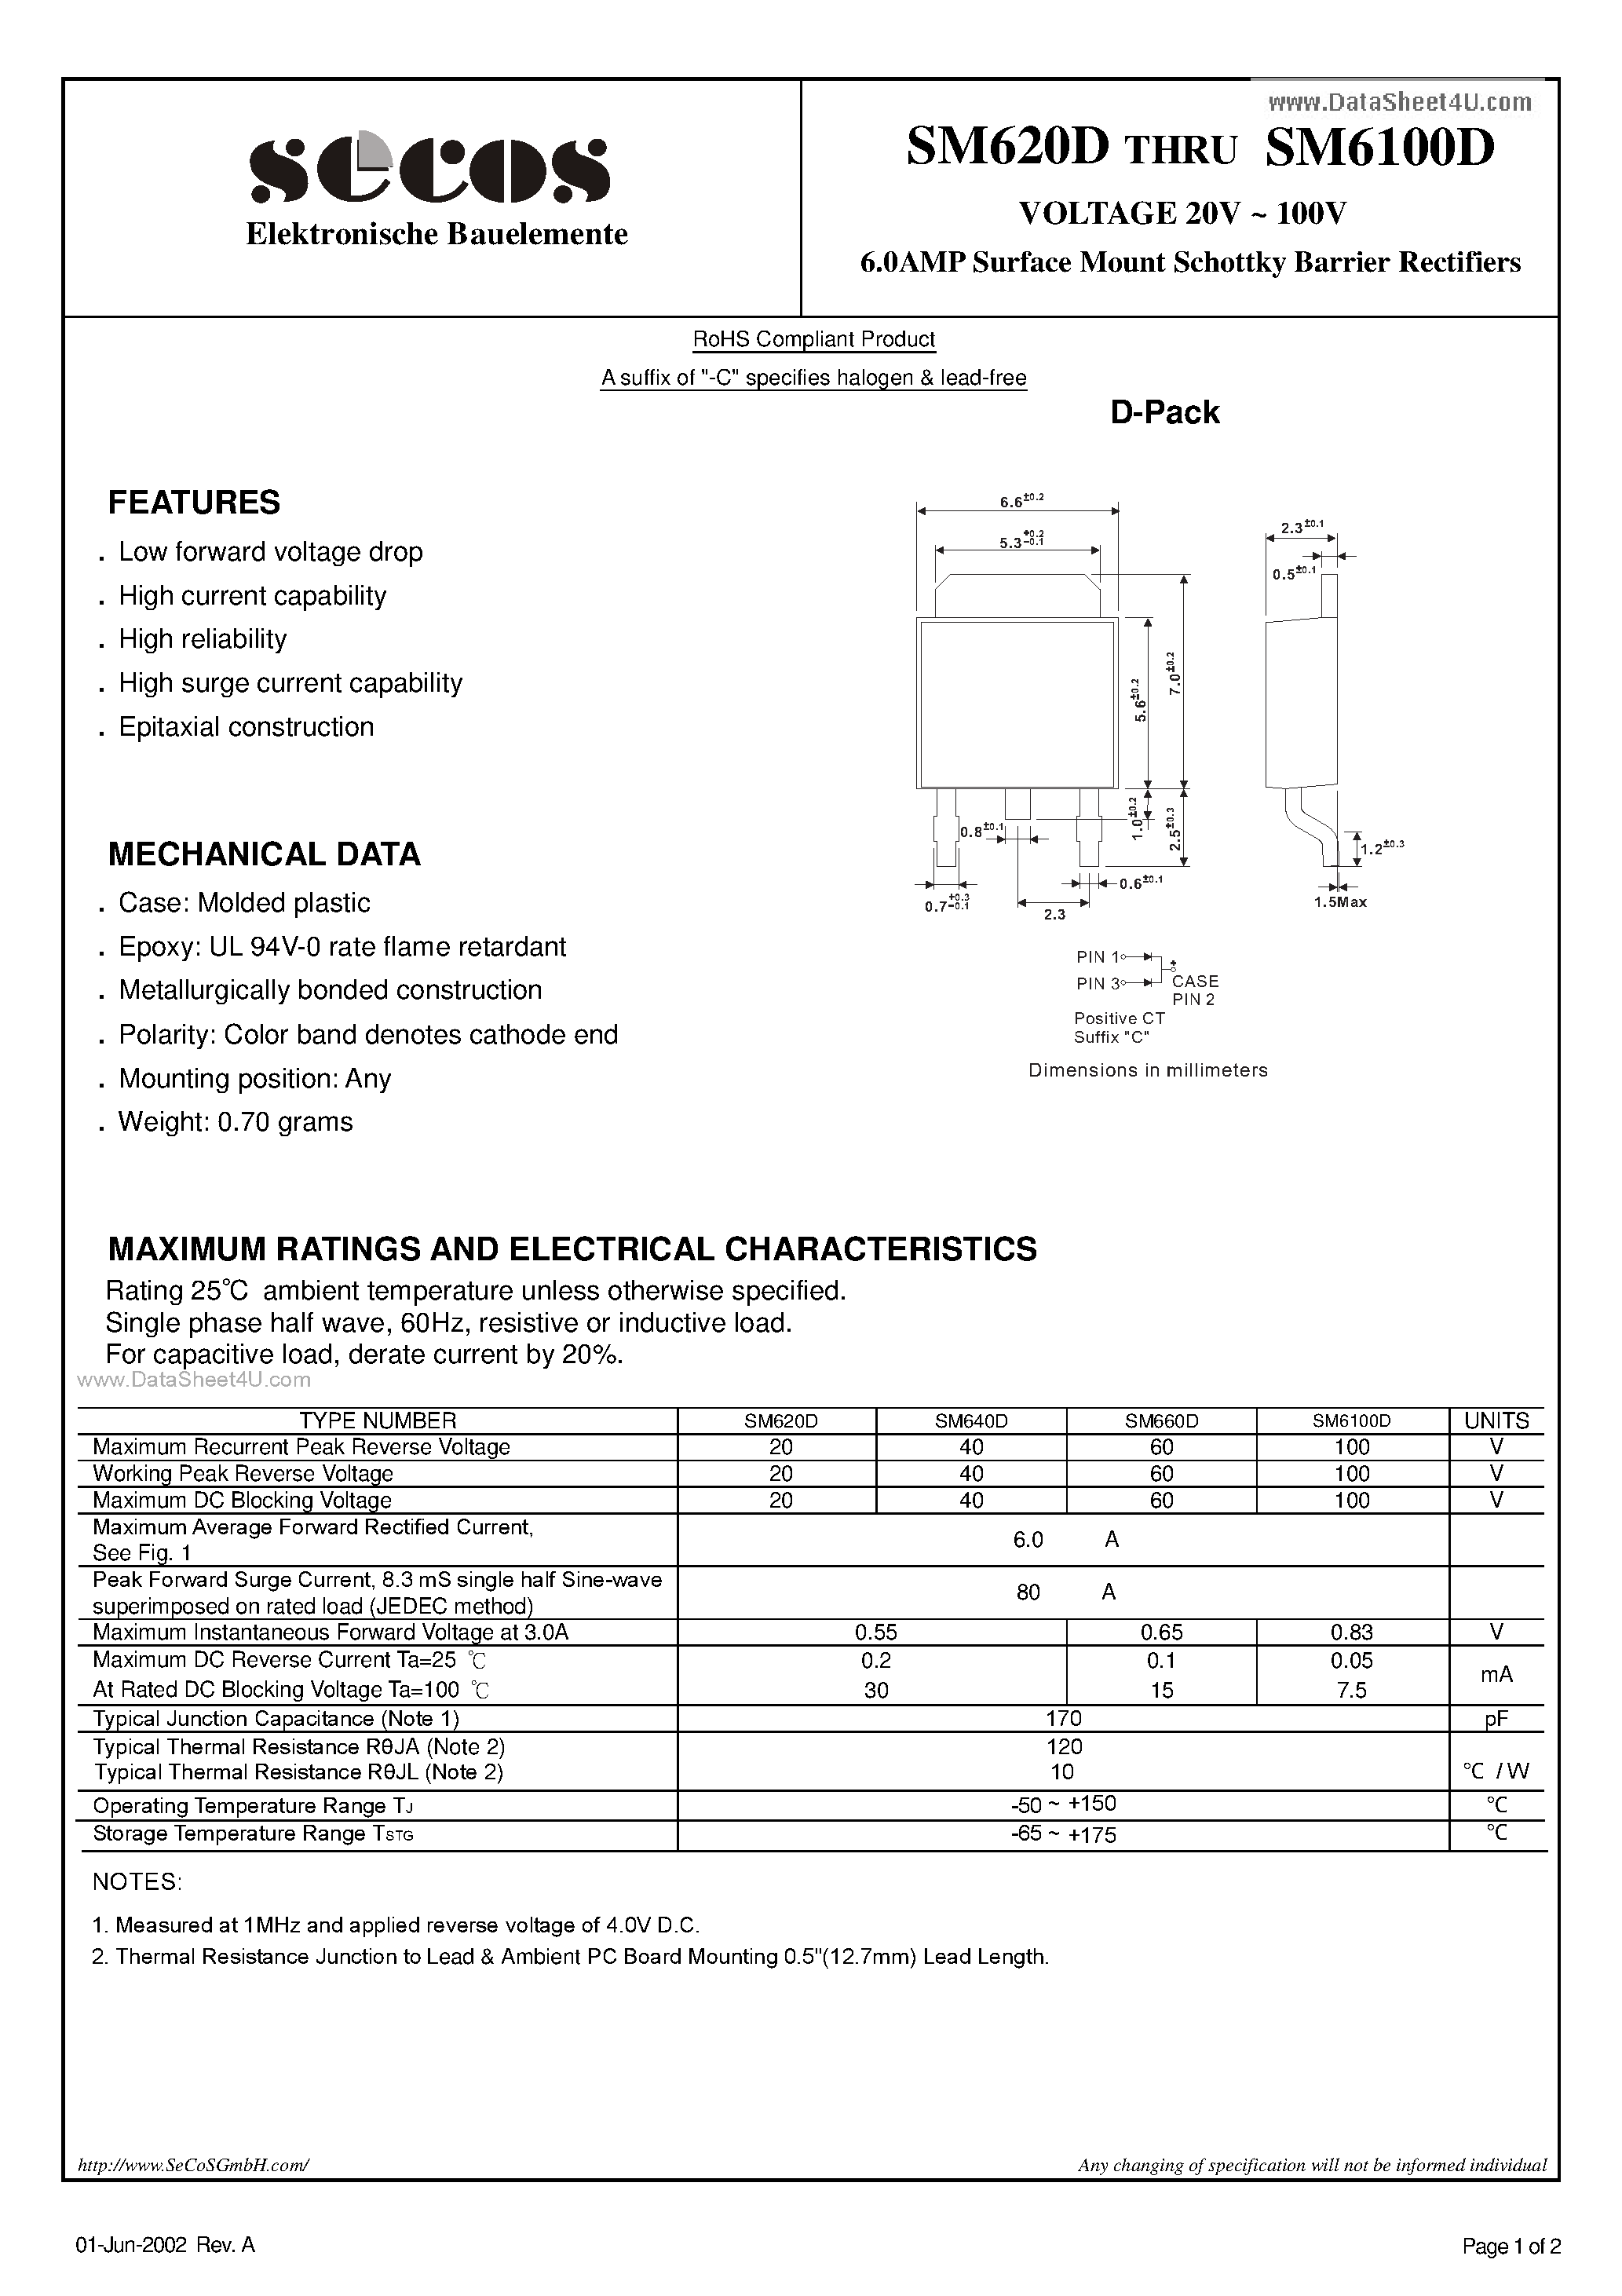 Даташит SM6100D-(SM620D - SM6100D) 6.0AMP Surface Mount Schottky Barrier Rectifiers страница 1